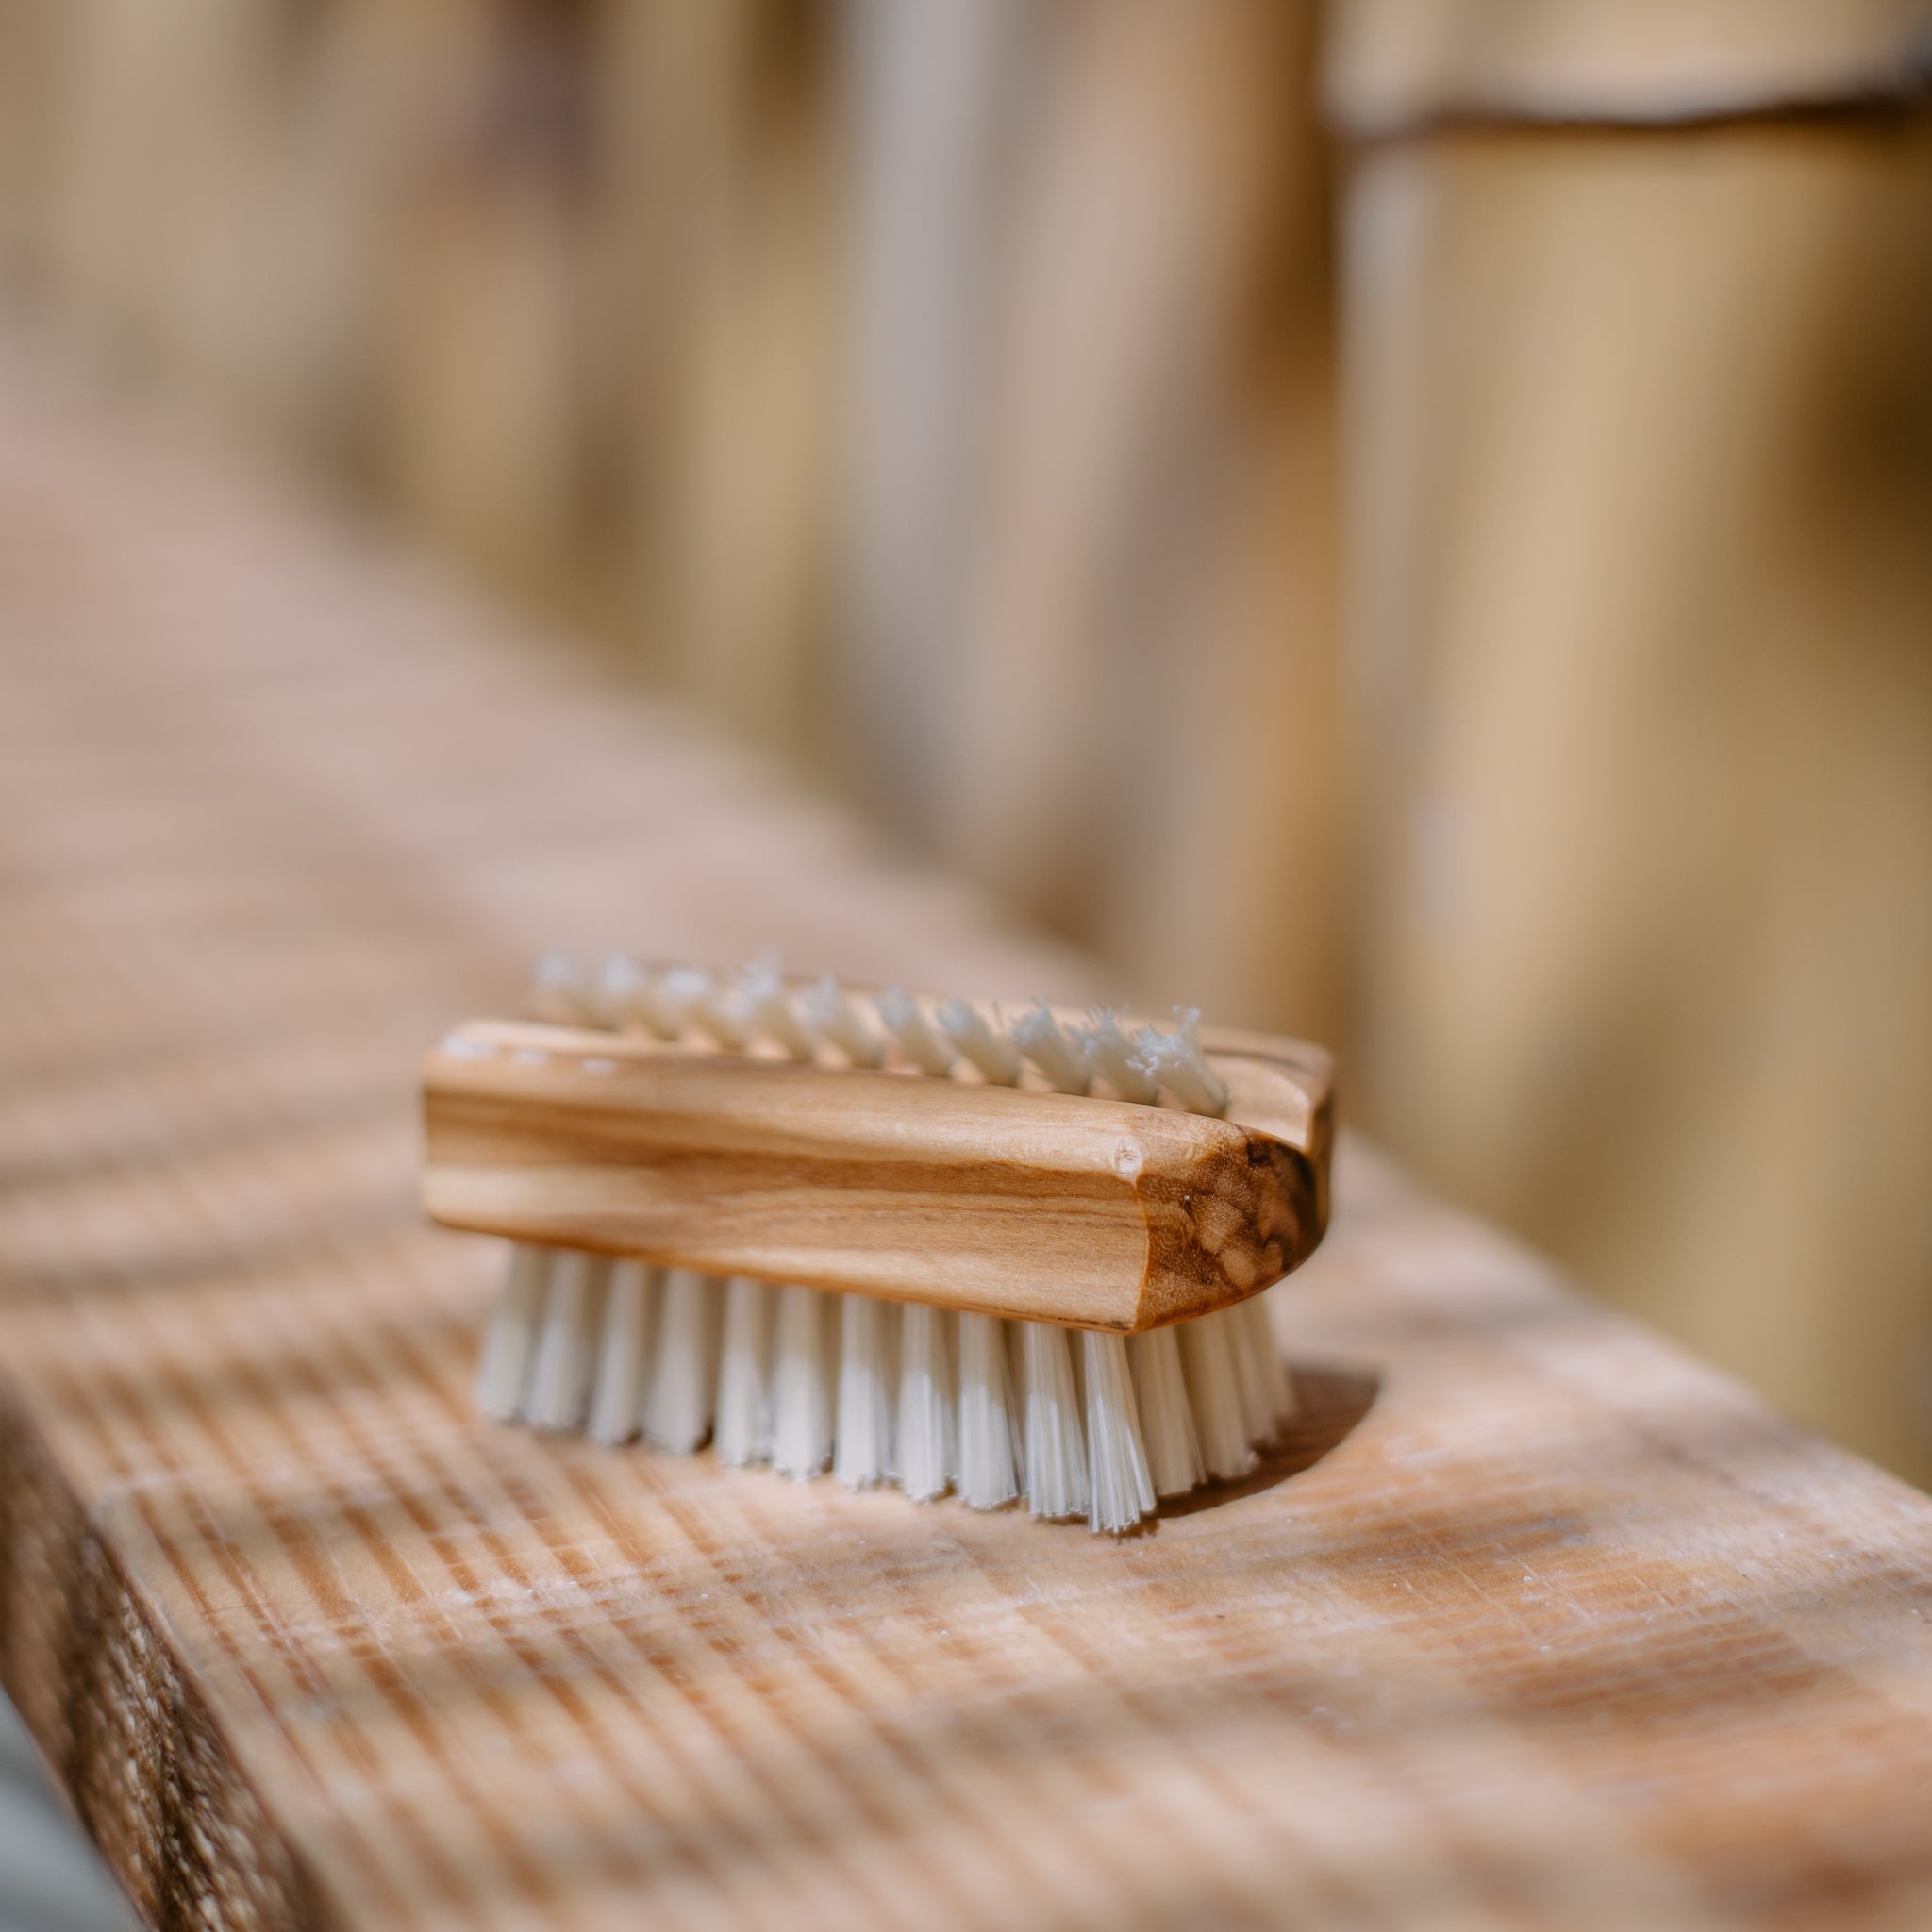 New Natural Bristle Wooden Wood Manicure Nail Cleaning Brush Scrubbing  Tools KE | eBay